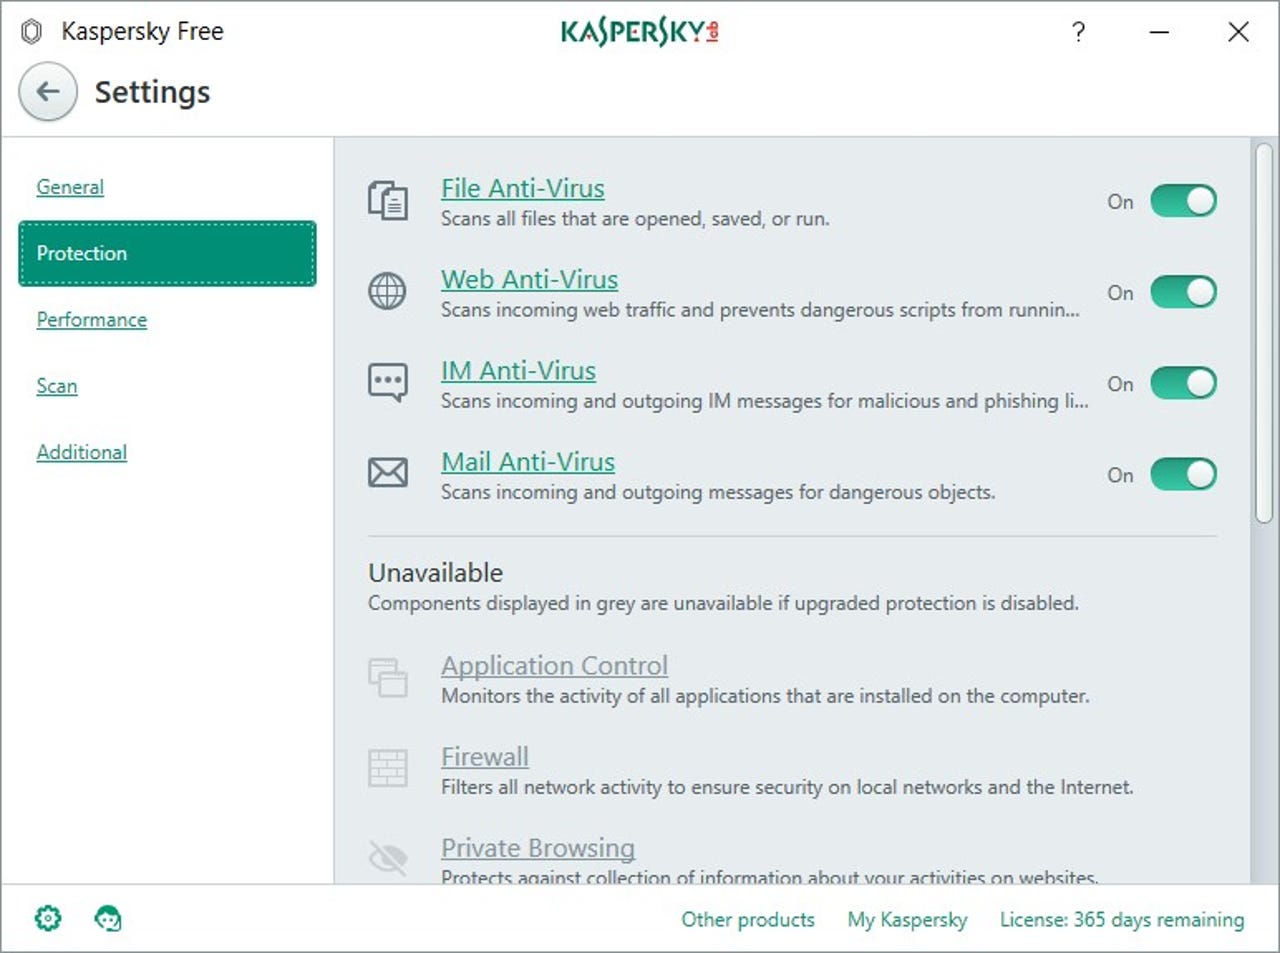 kaspersky-free-antivirus-global-launch-2.jpg